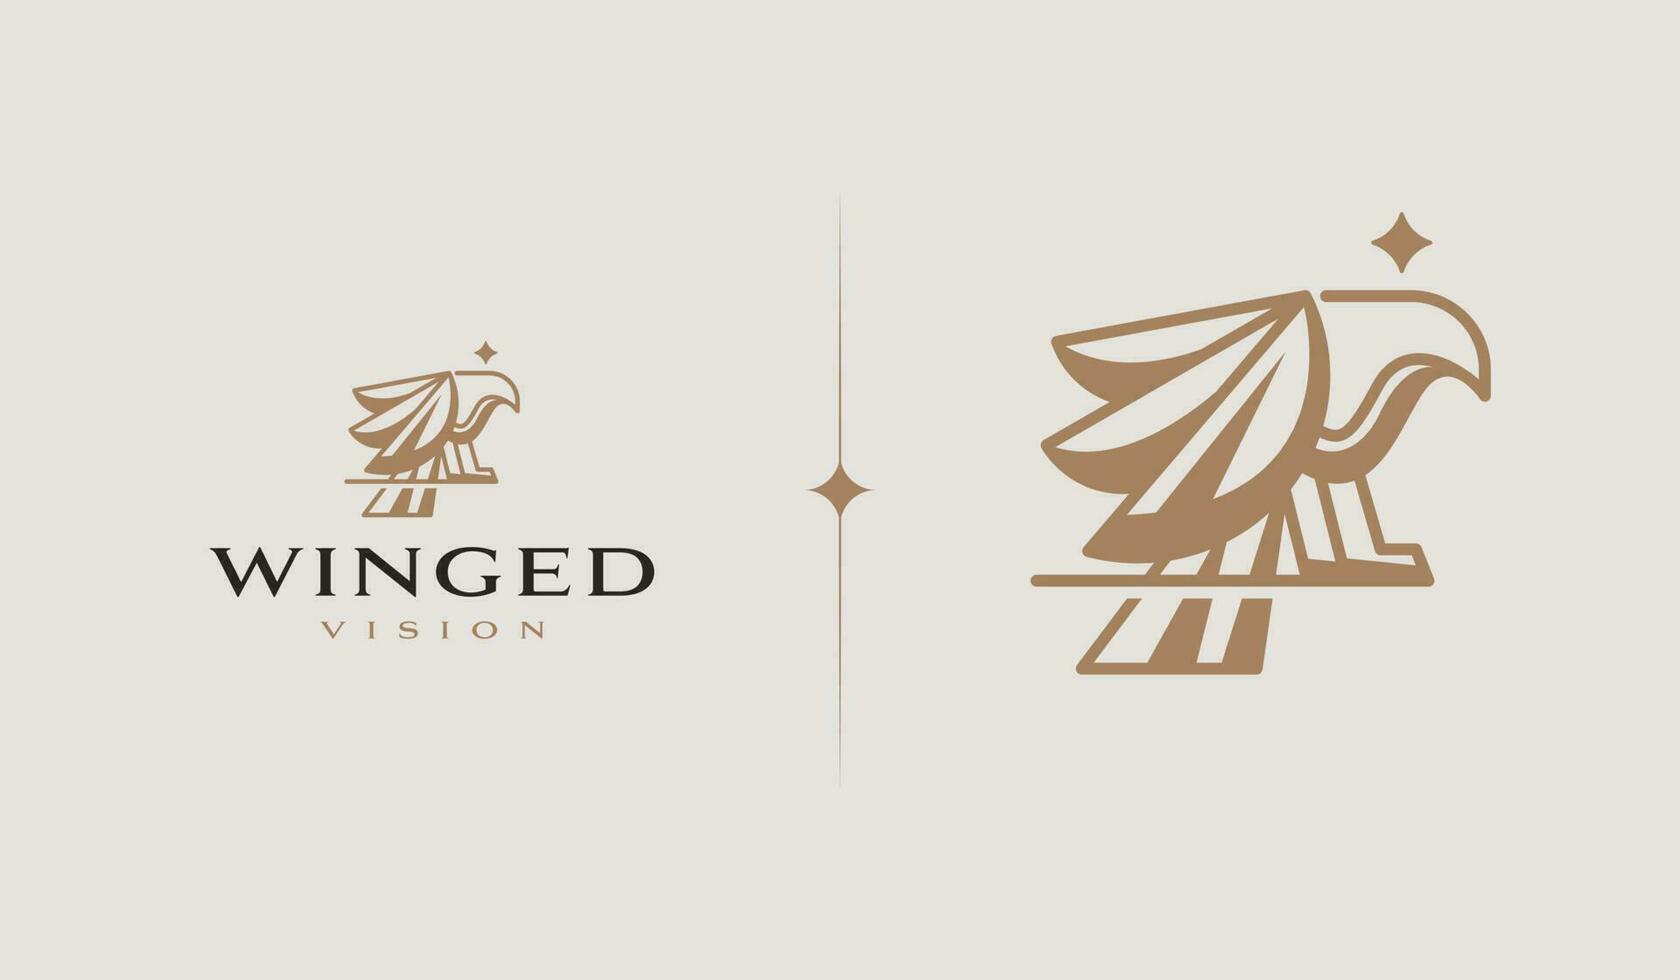 Eagle Falcon Bird. Universal creative premium symbol. Vector sign icon logo template. Vector illustration